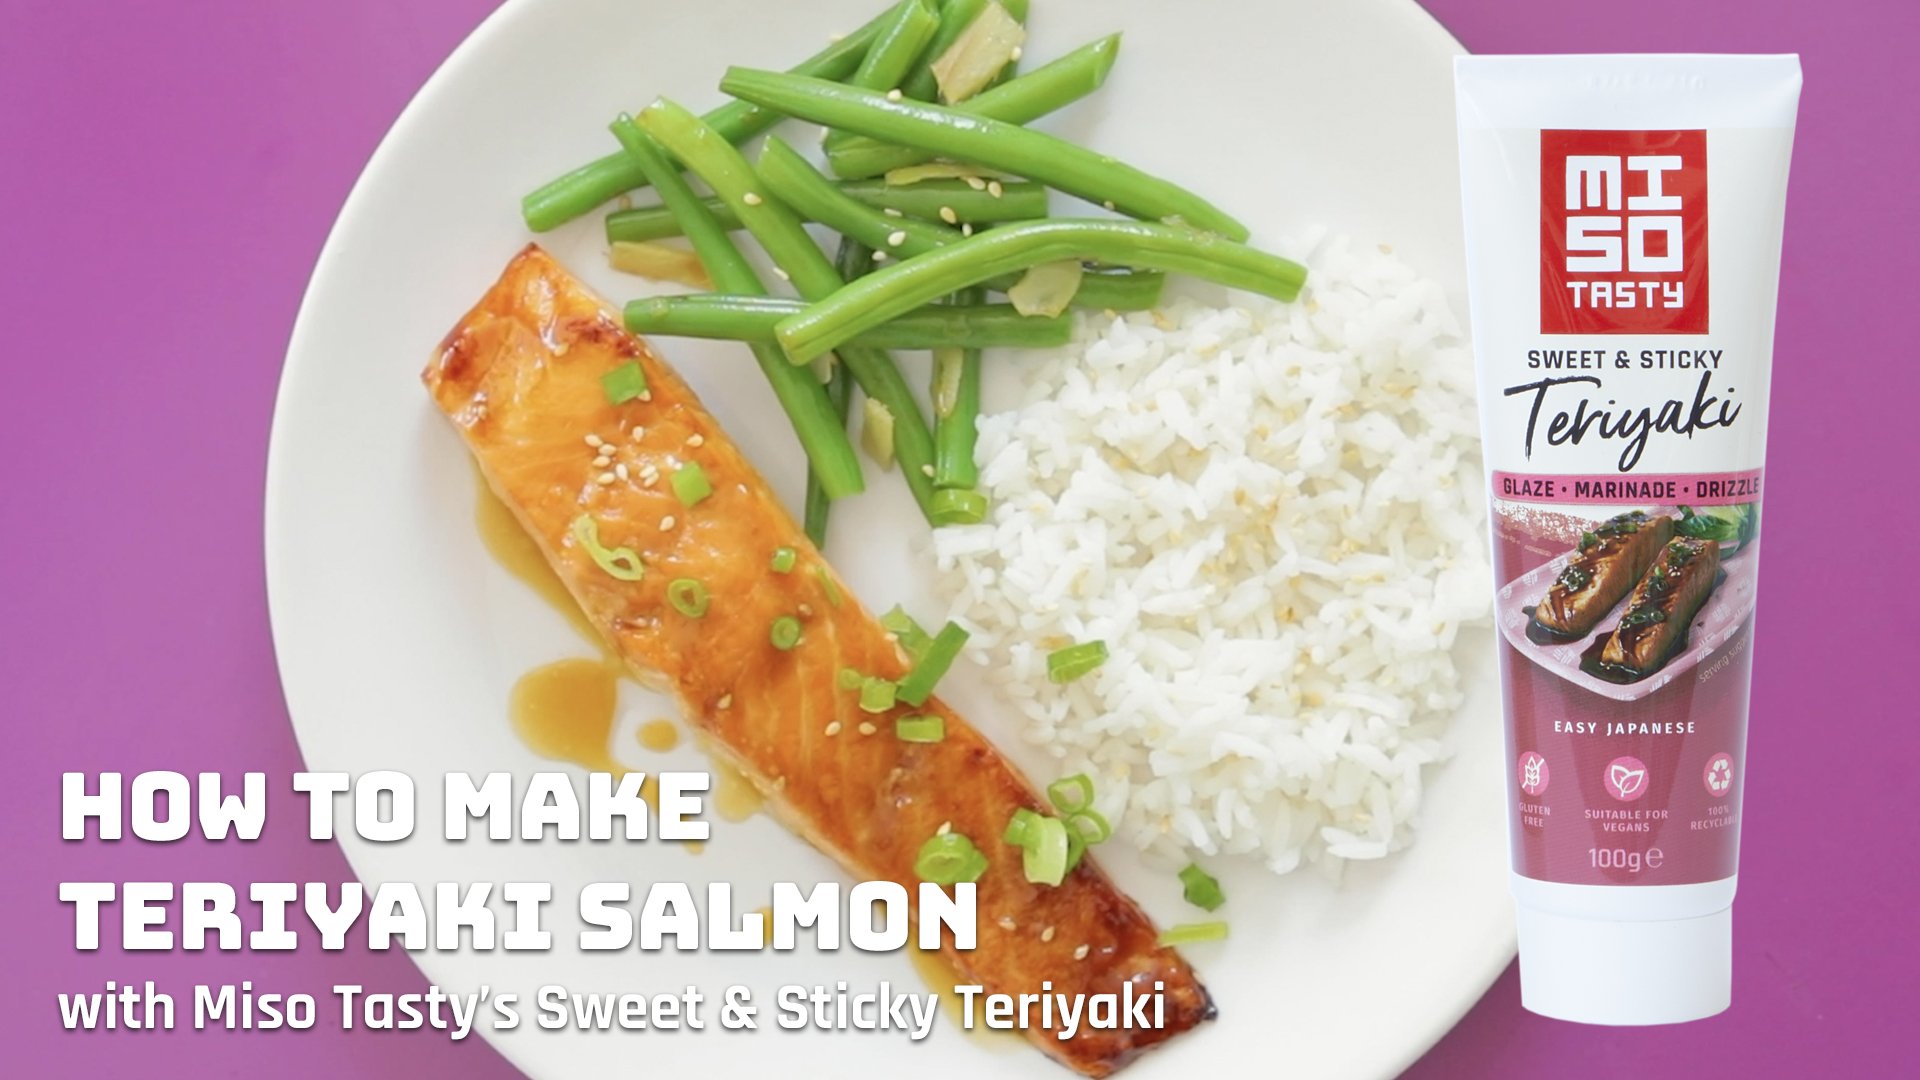 Miso Tasty’s Quick Teriyaki Salmon